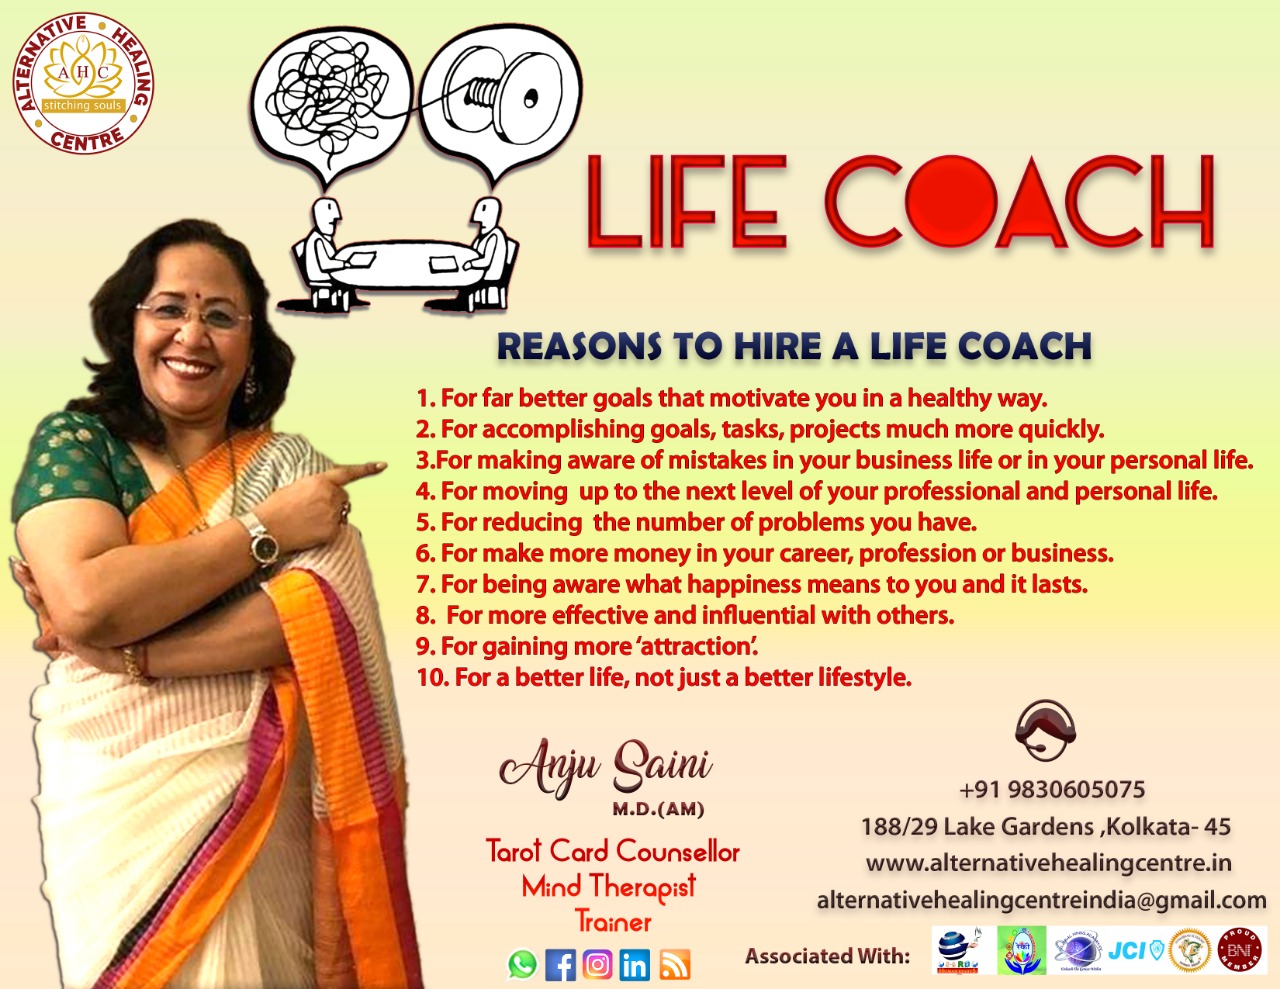 Life Coaching Sessions by Anju Saini - Guwahati